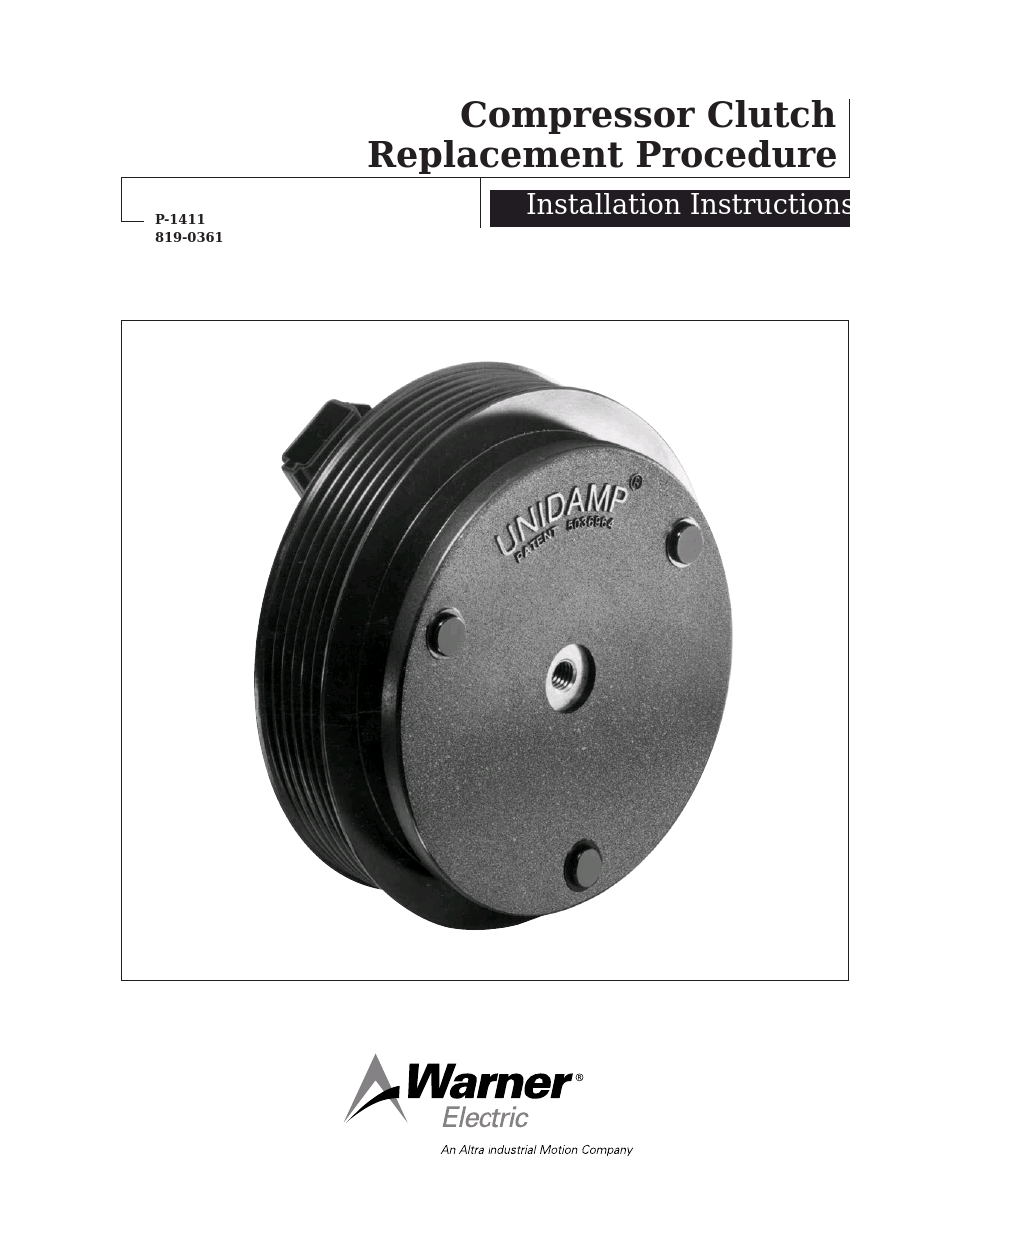 Compressor Clutch Replacement Procedure